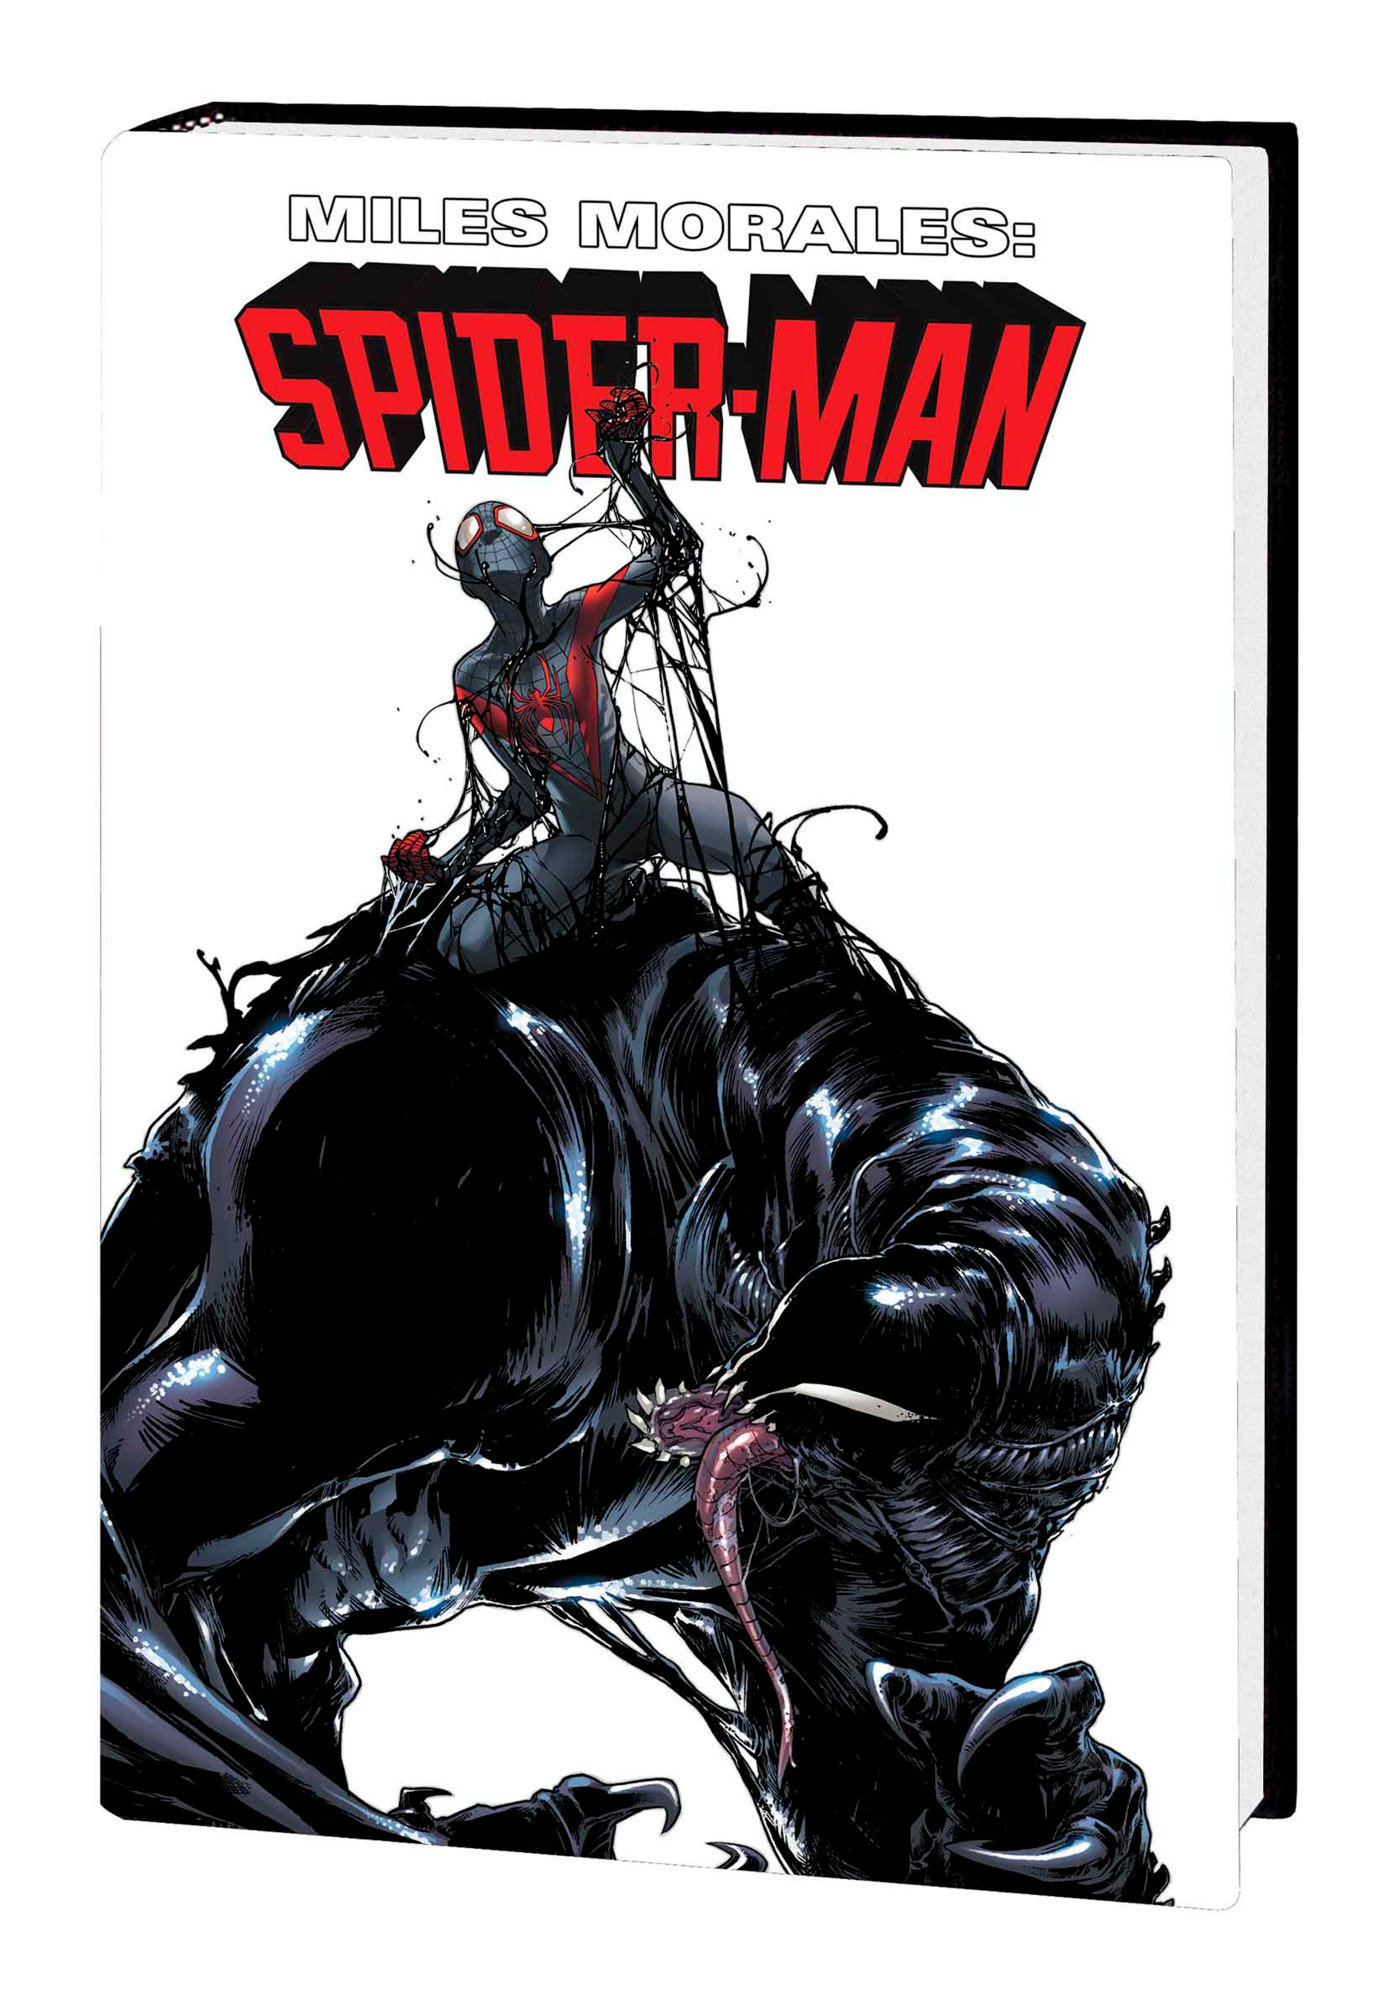 Miles Morales: Spider-Man Omnibus Hardcover Volume 1 Pichelli Direct Market Edition